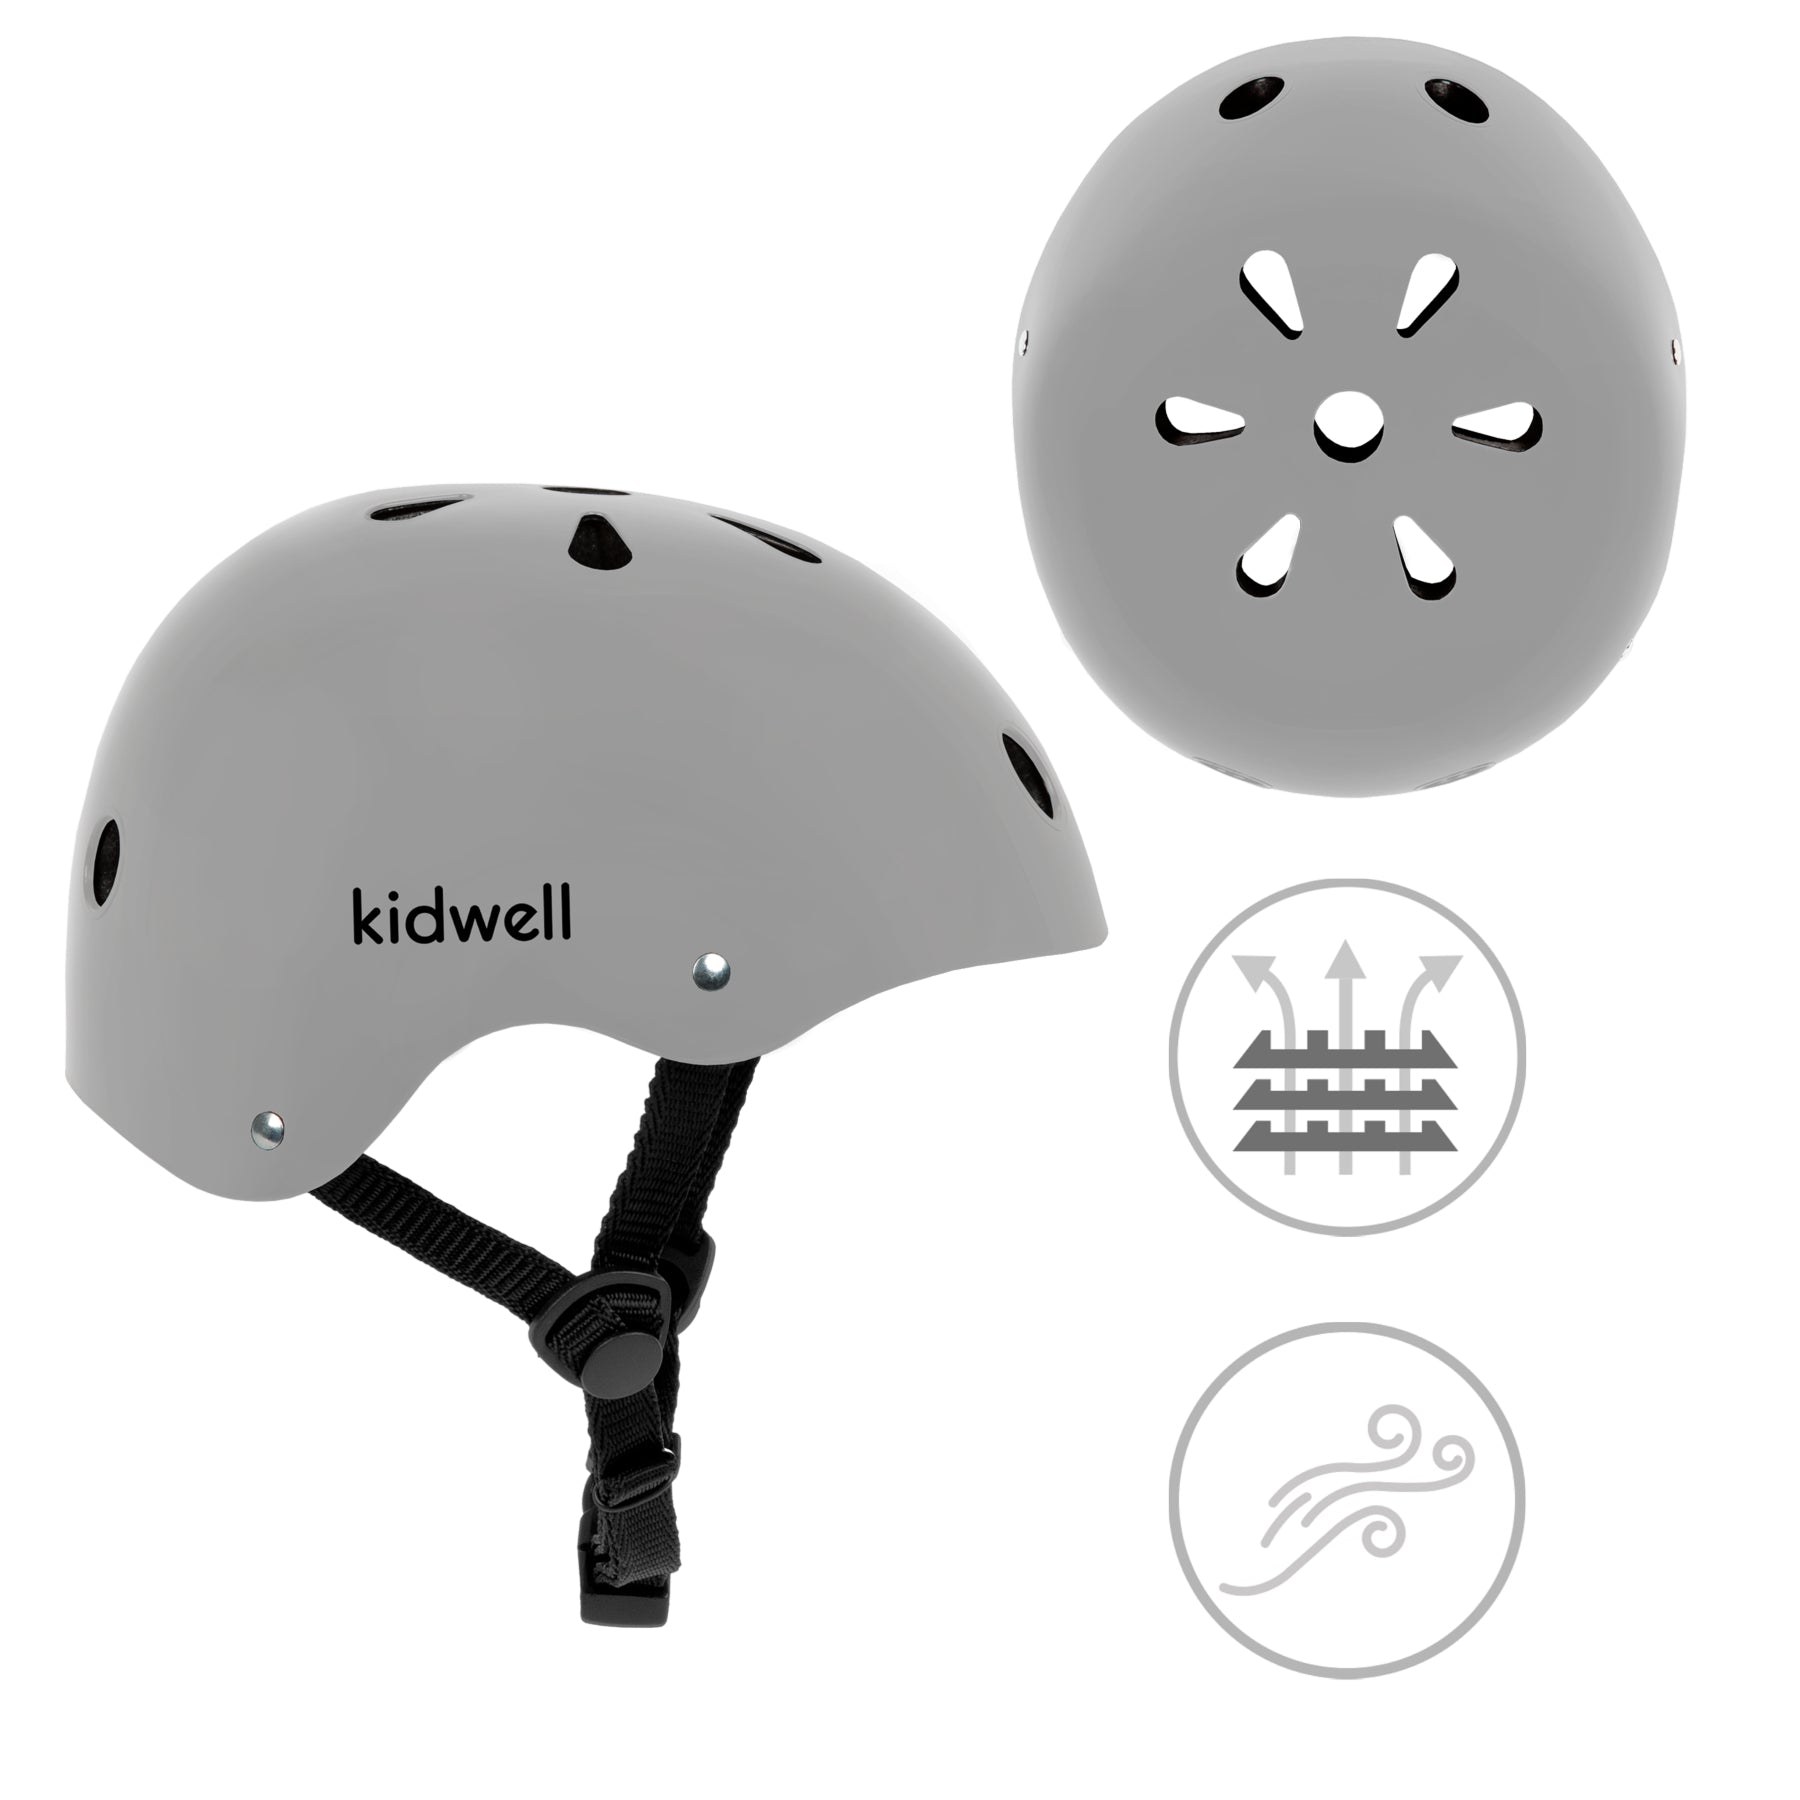 Kidwell ORIX II S - Gray